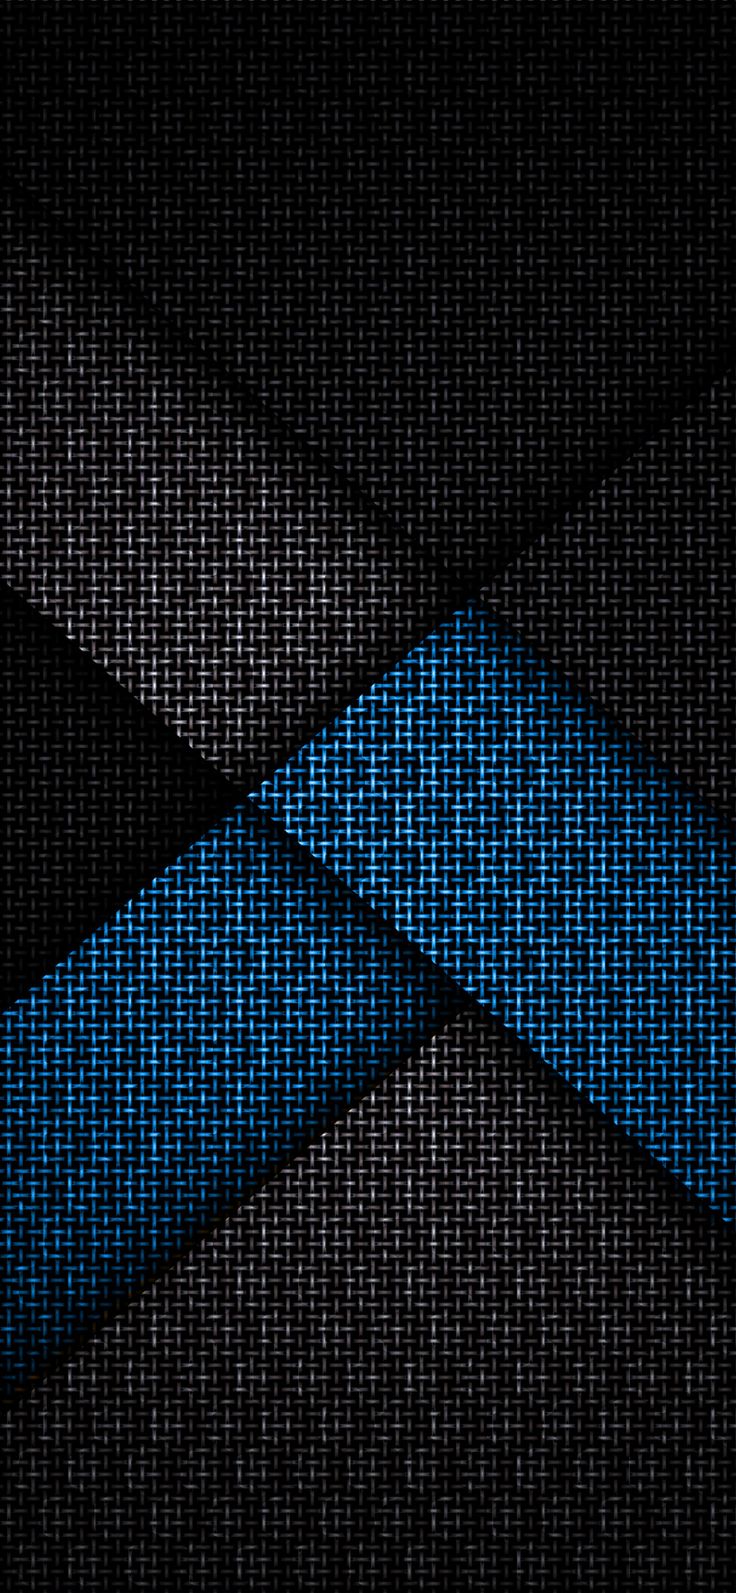 Abstract Pride Blue 4k wallpaper. Google pixel wallpaper, iPhone wallpaper image, Phone wallpaper image